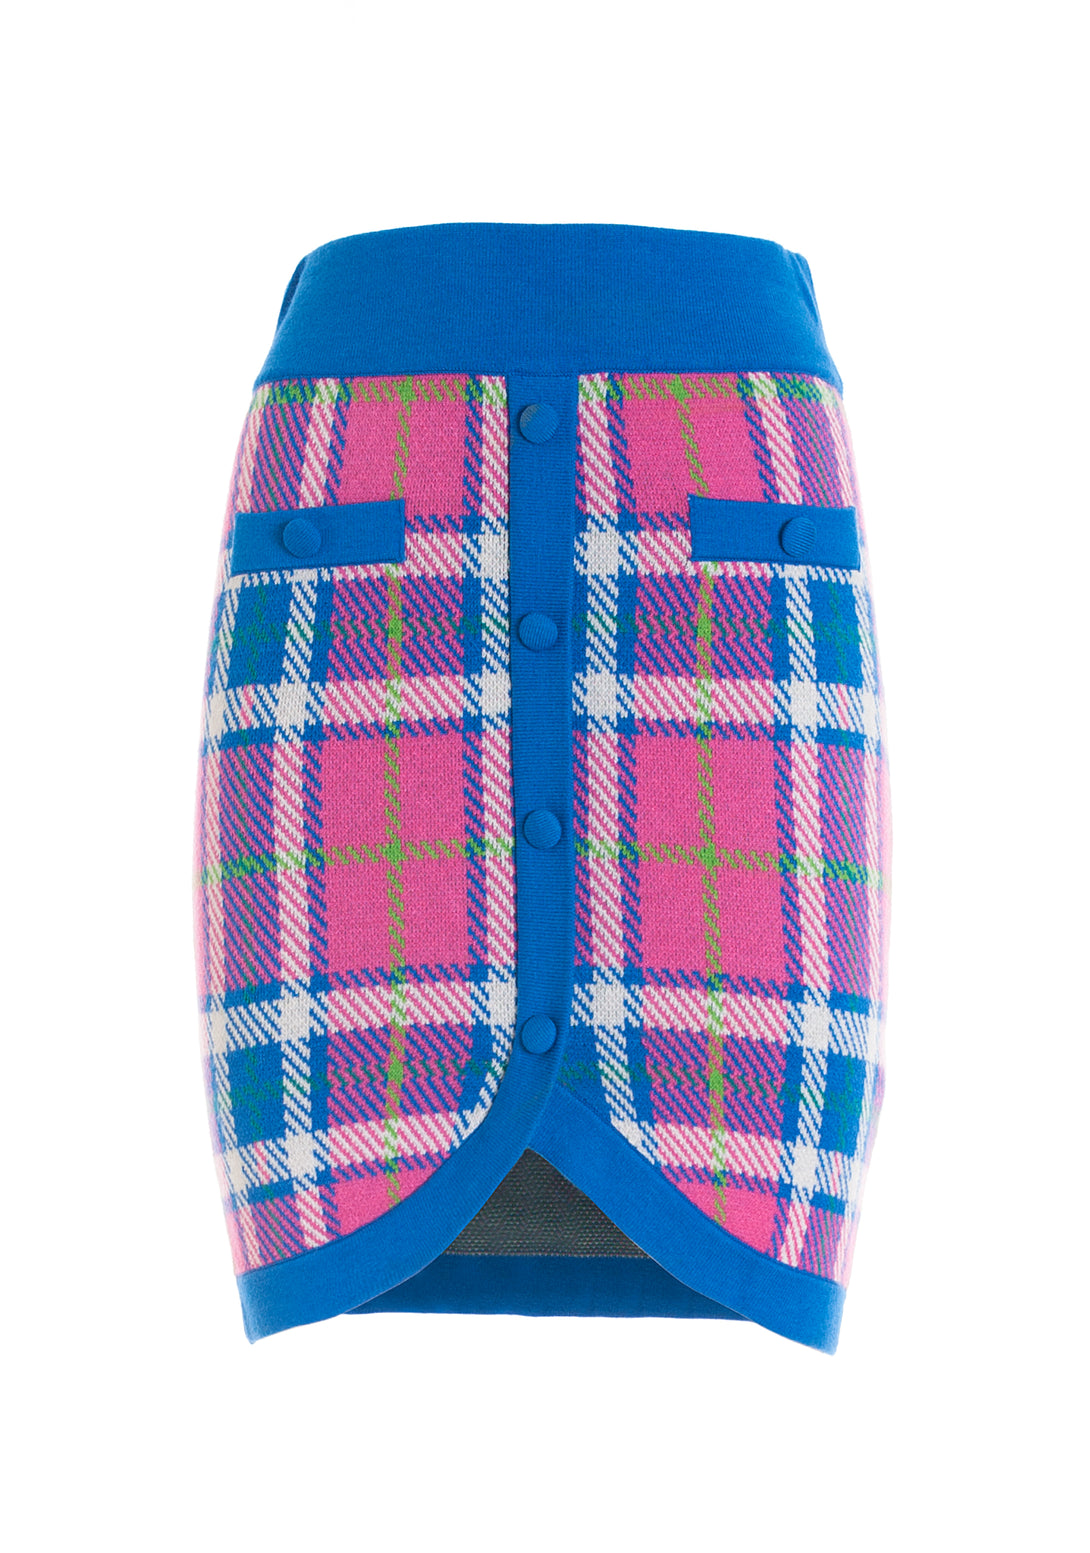 Knitted mini skirt slim fit made in tartan jacquard